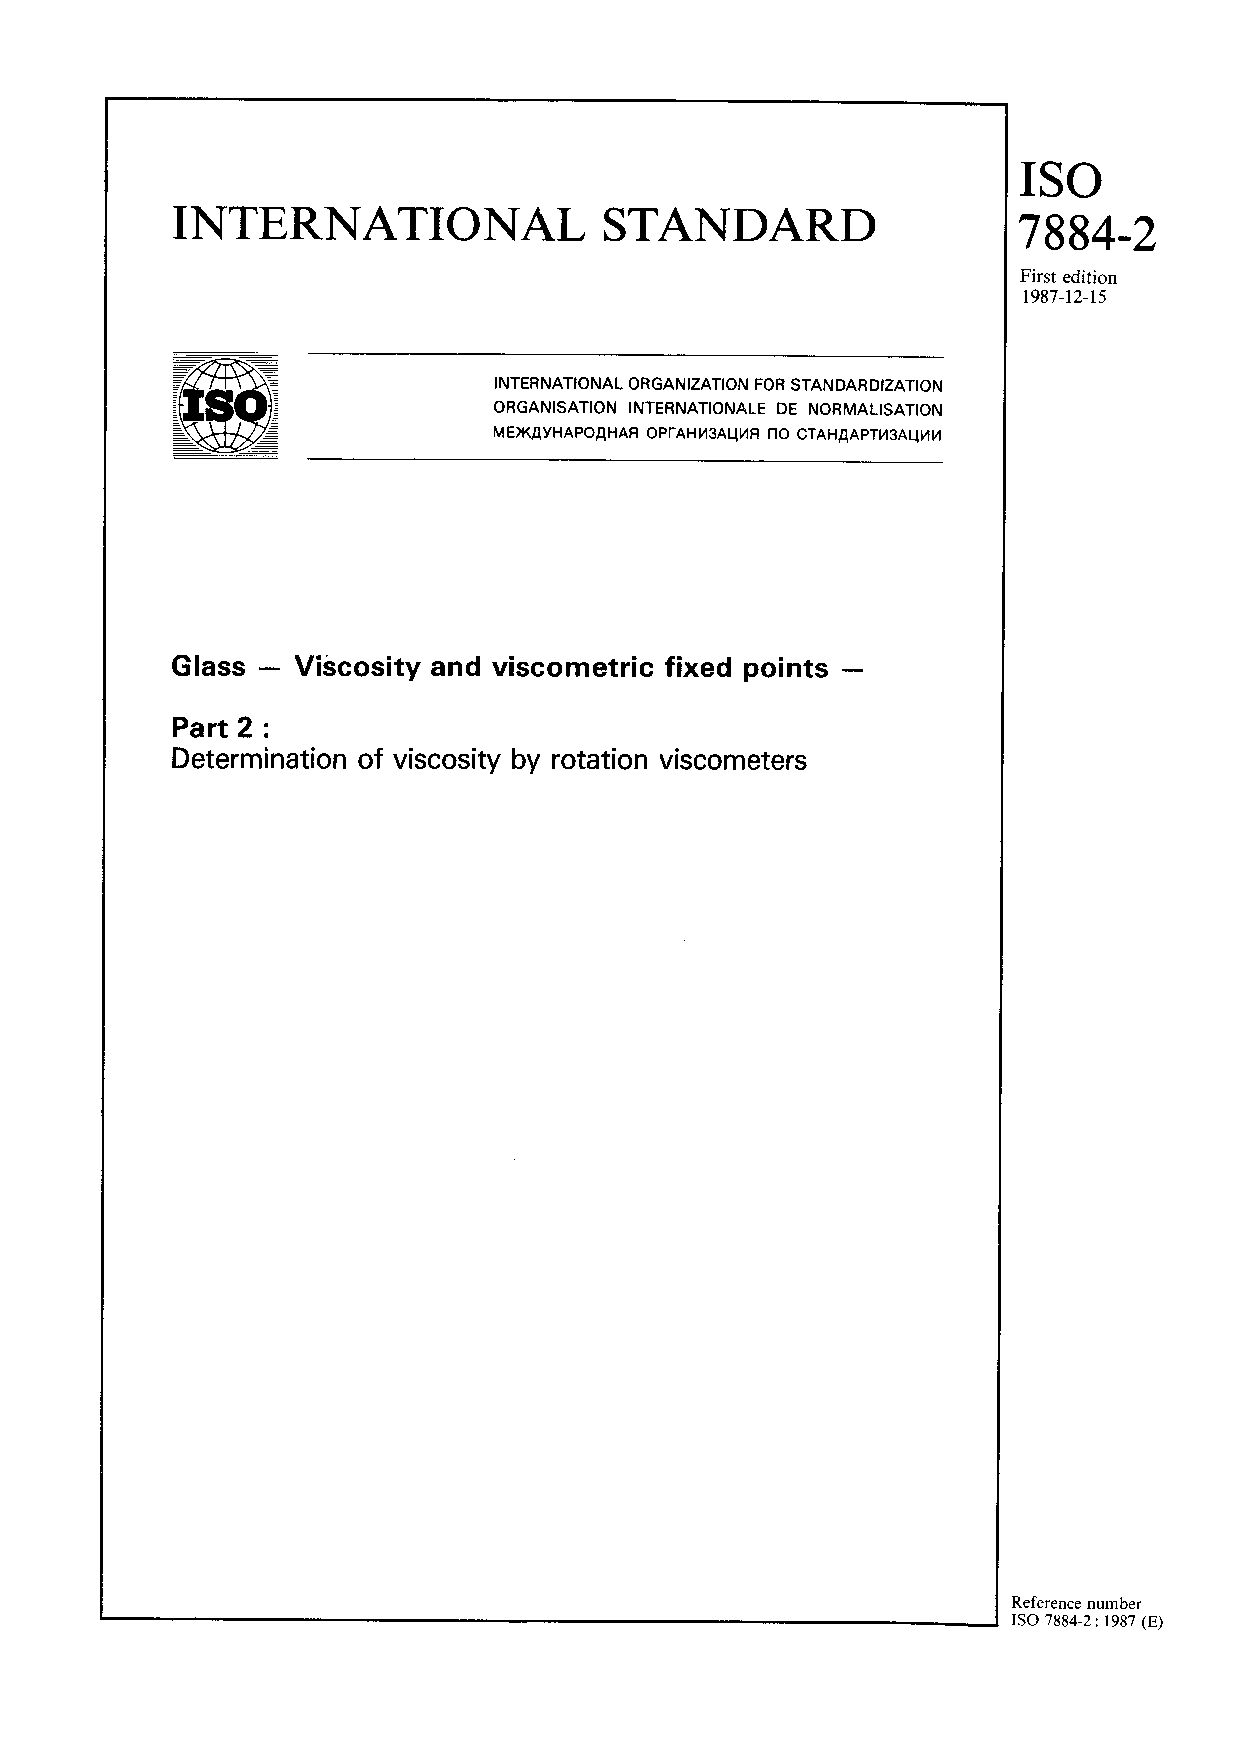 ISO 7884-2:1987封面图